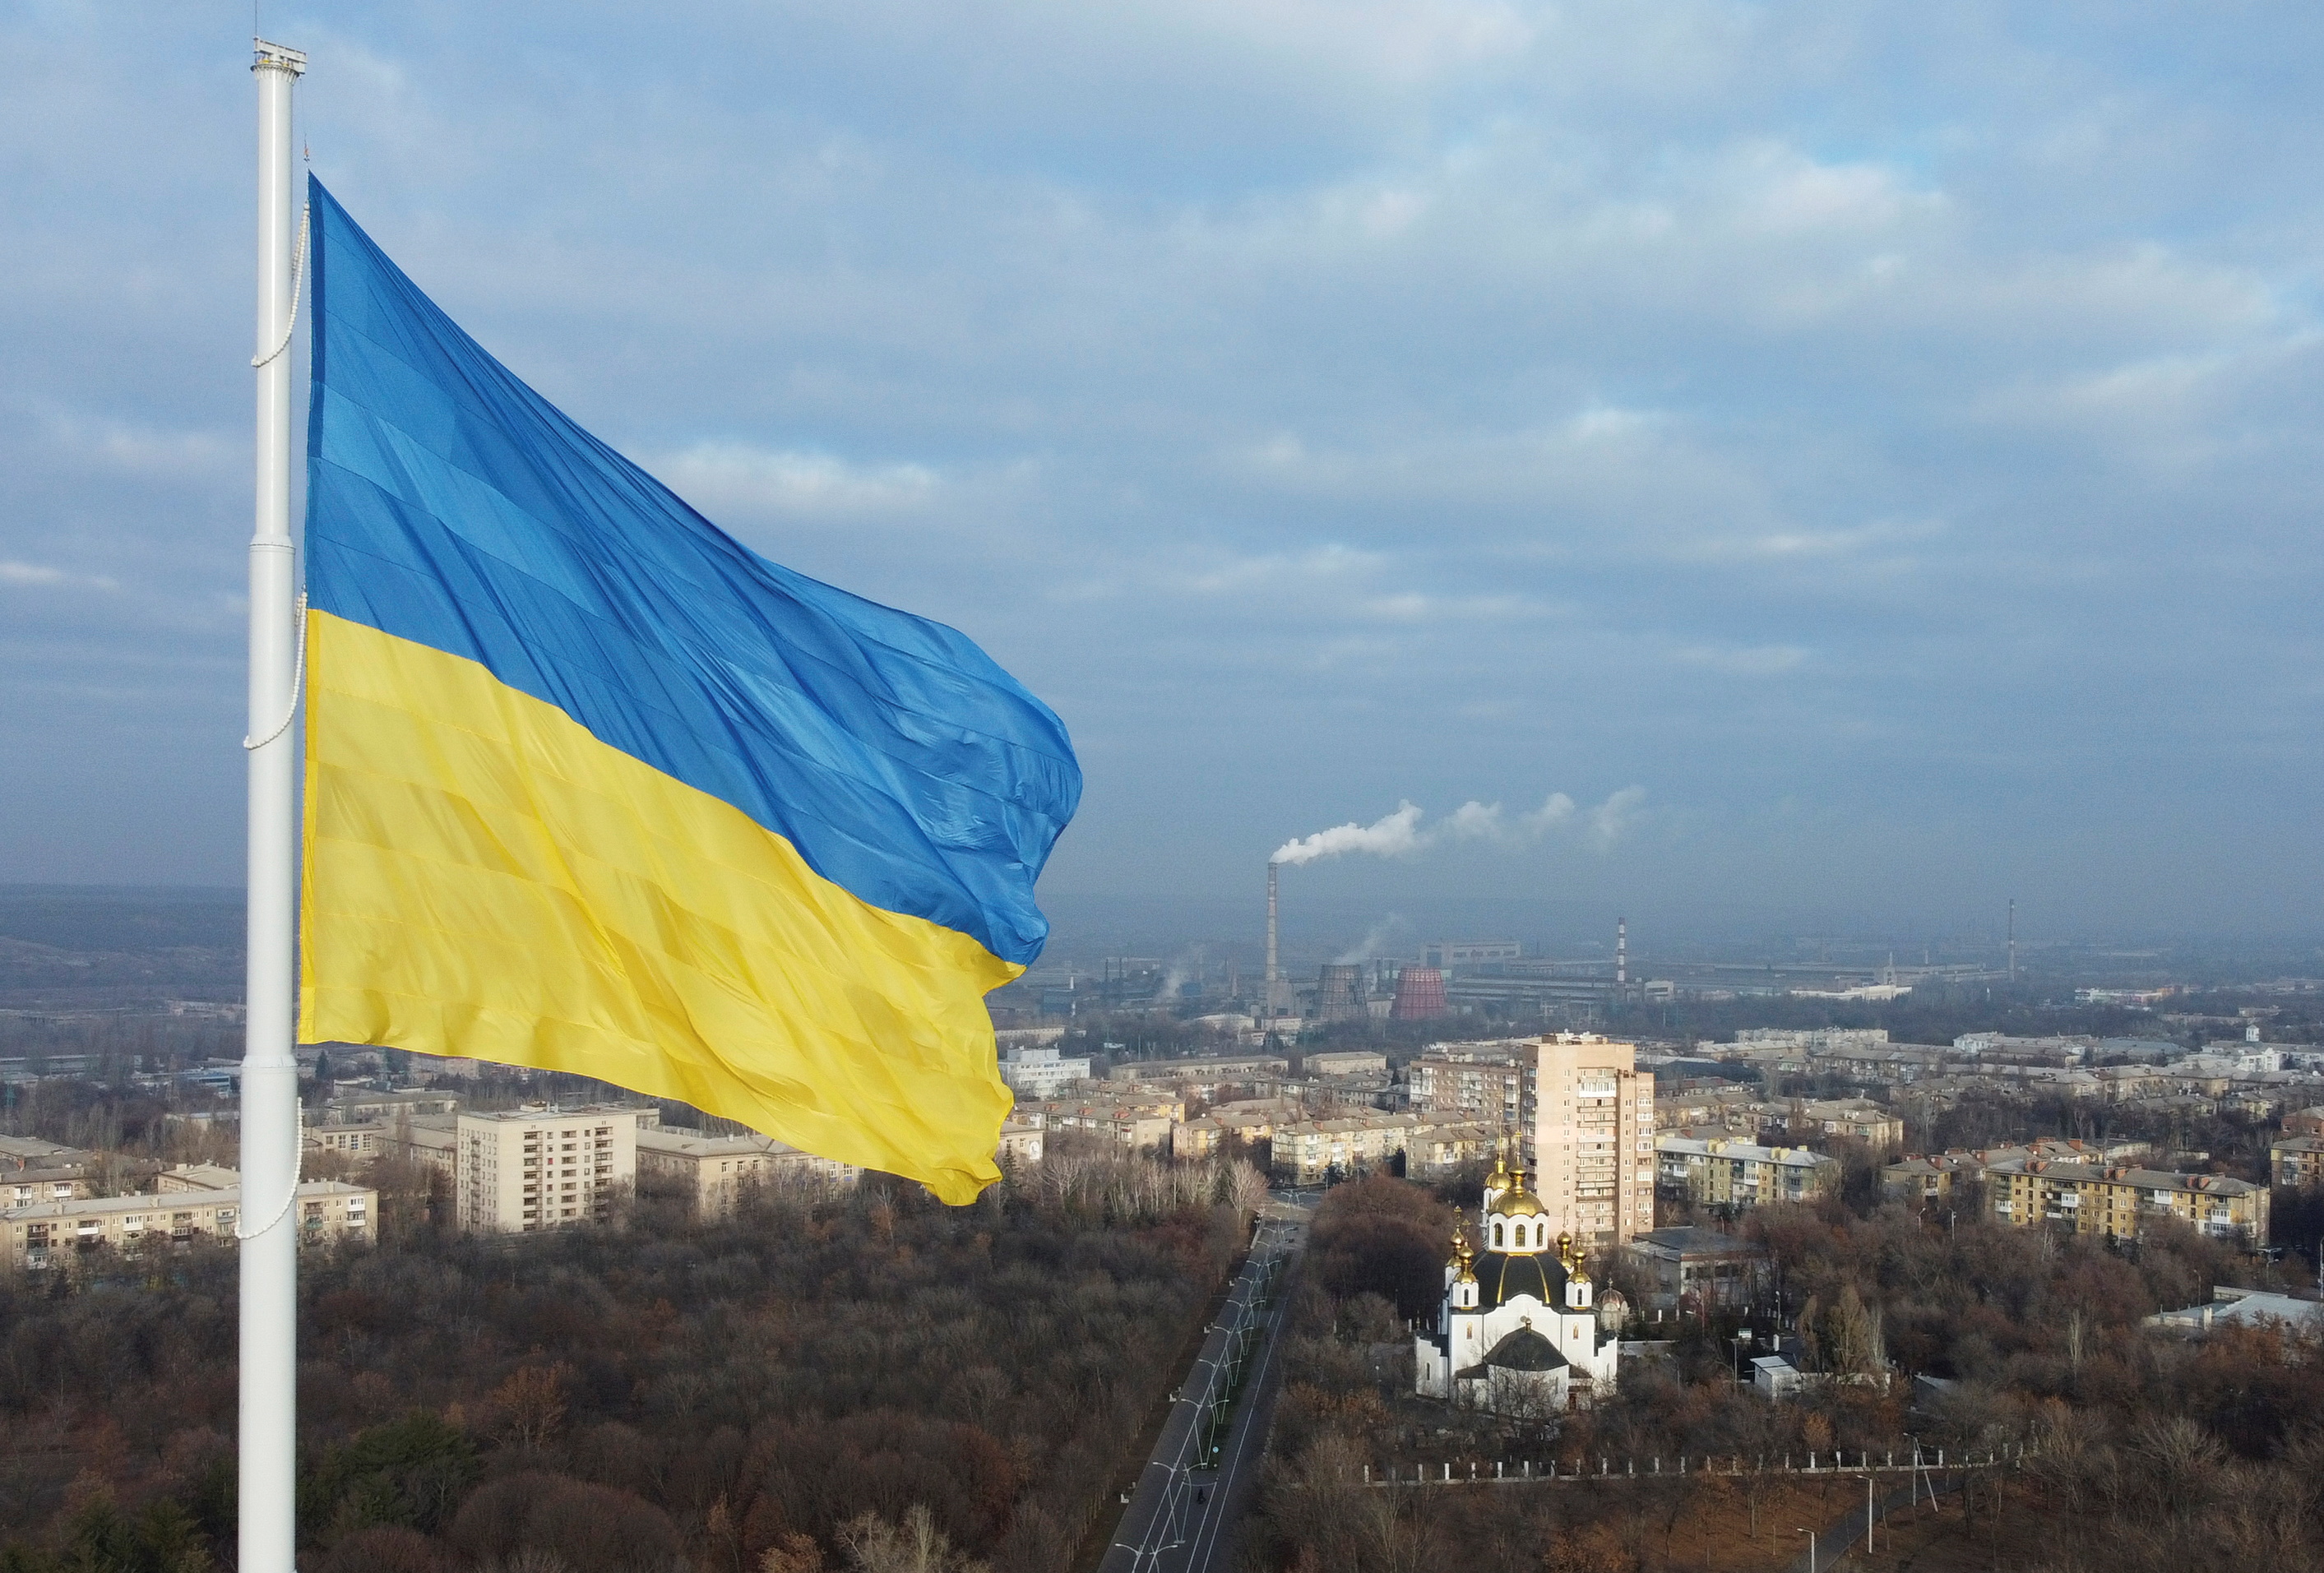 The national flag of Ukraine flies over the town of Kramatorsk, Ukraine November 25, 2021. REUTERS/Valentyn Ogirenko